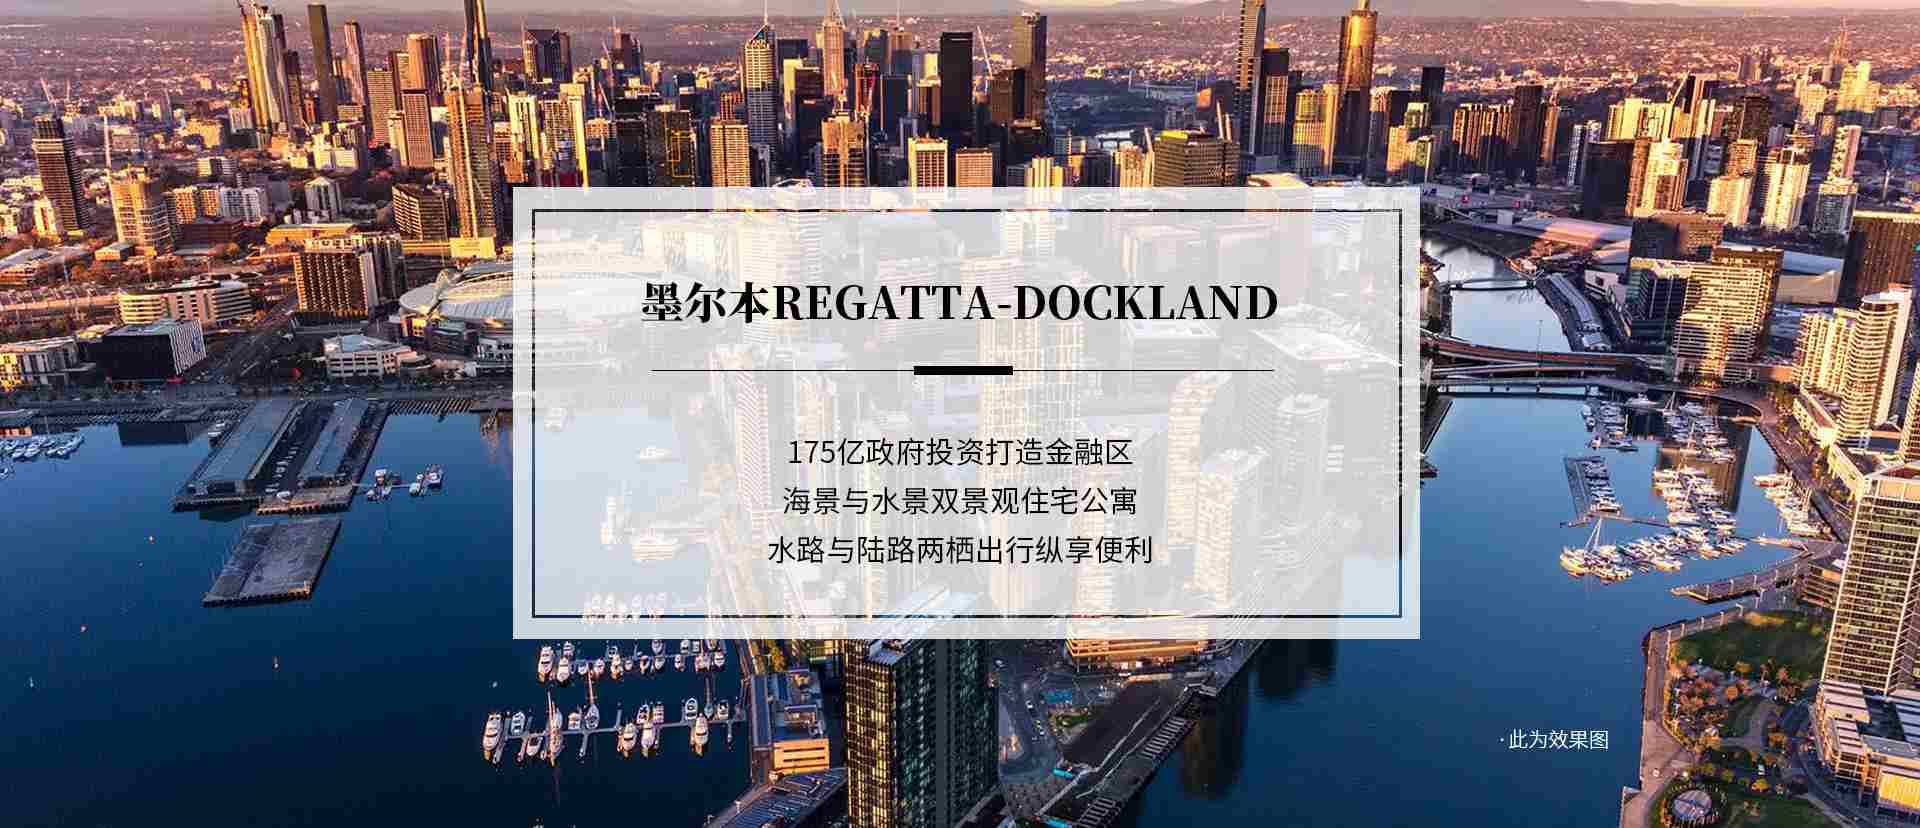 墨尔本Regatta-Dockland